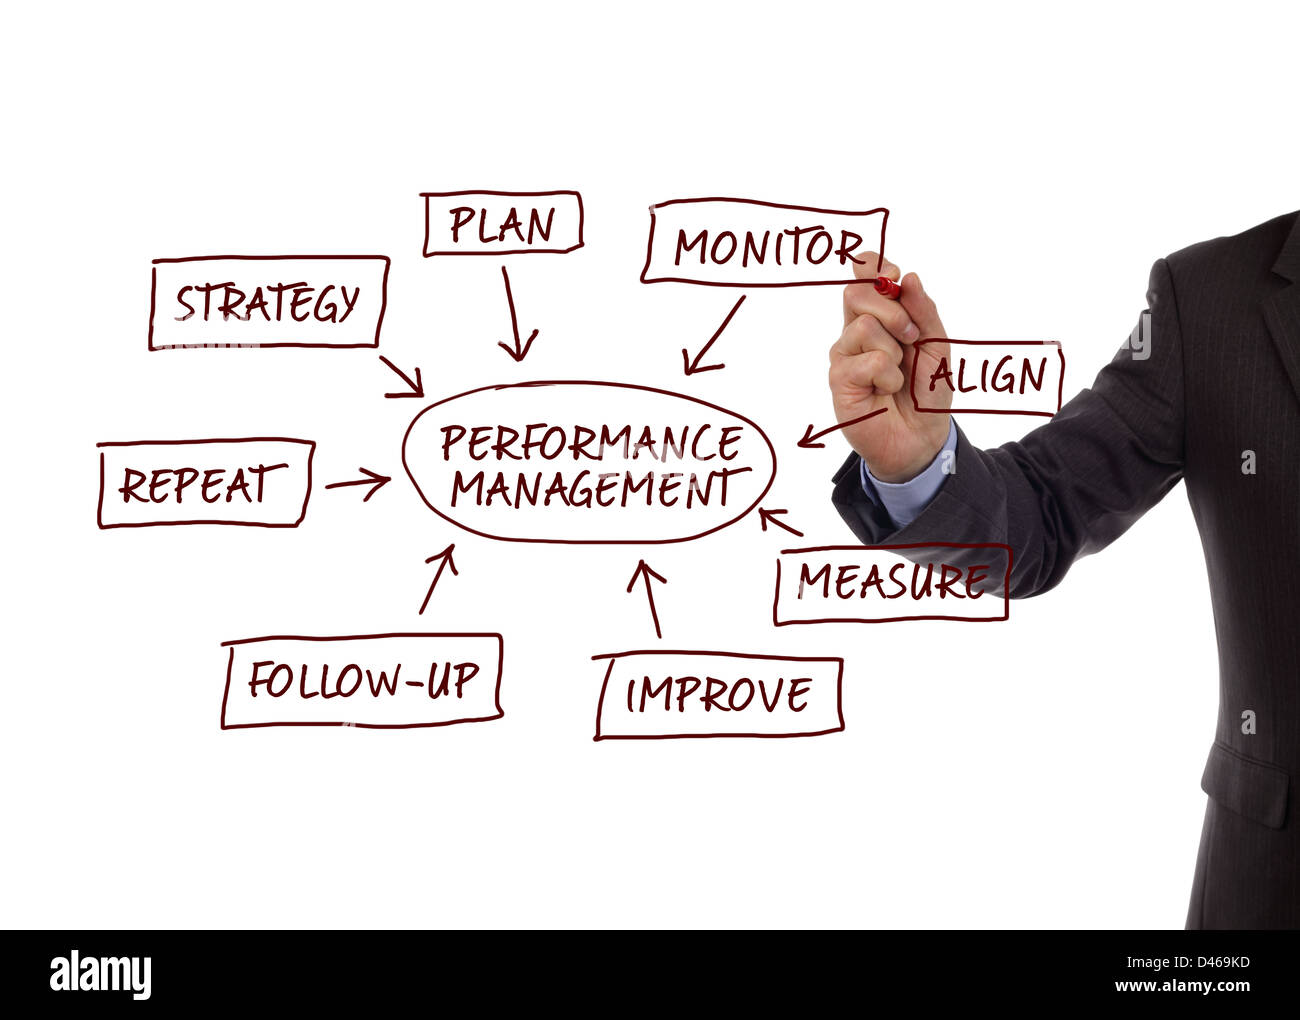 Performance management process diagram Stock Photo